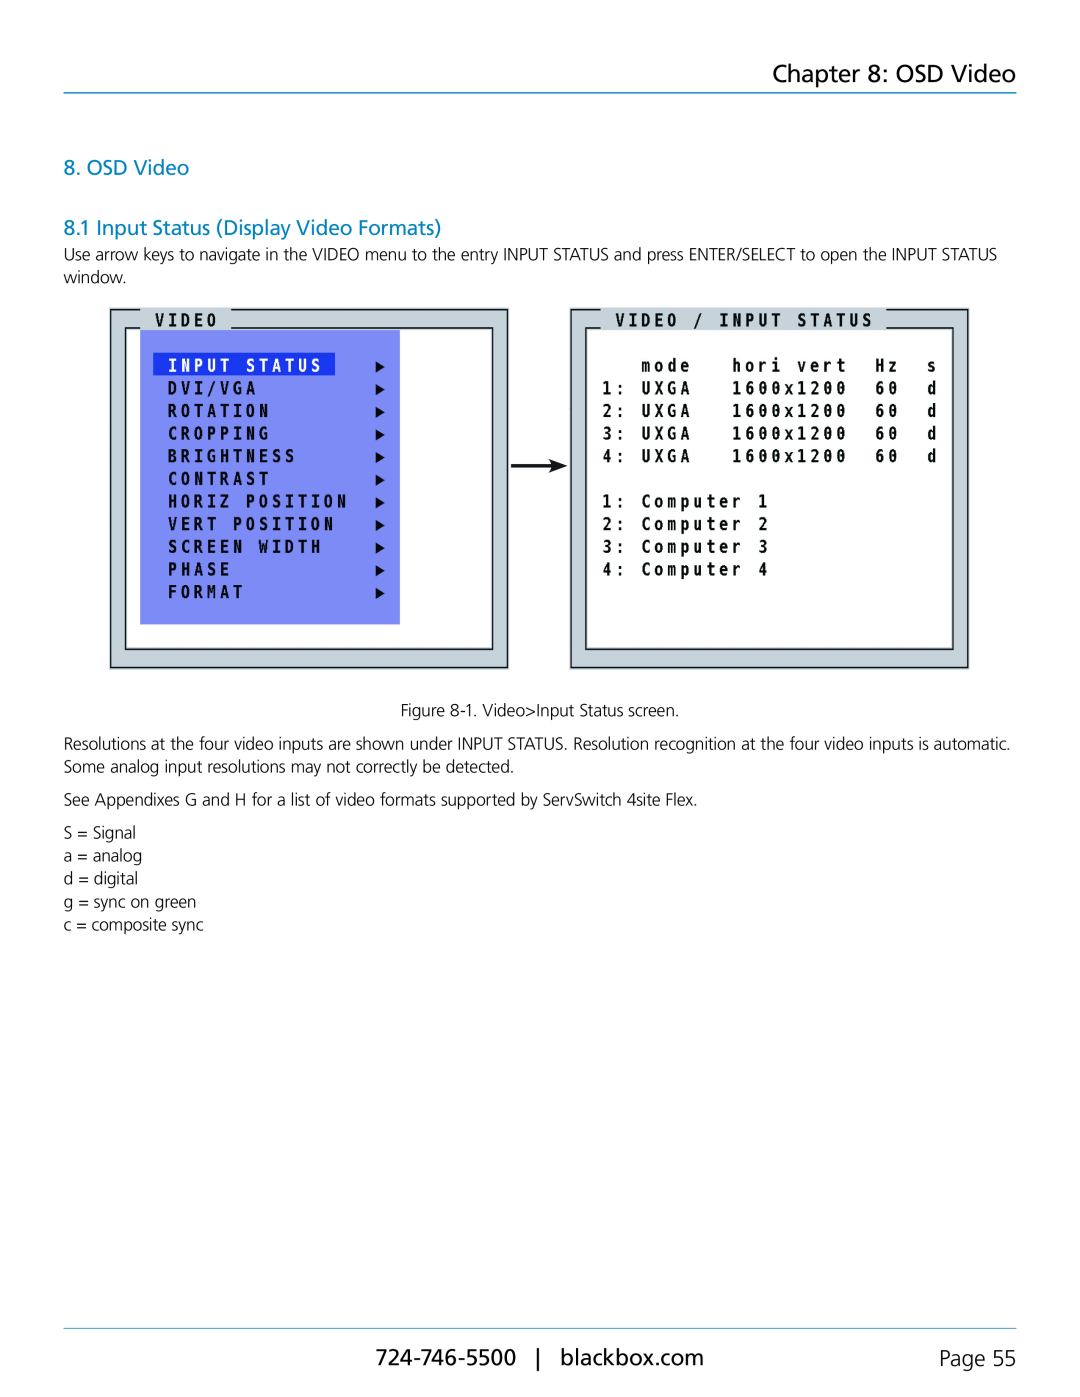 Black Box servswitch 4site flex, KVP40004A manual OSD Video 8.1 Input Status Display Video Formats, Page 